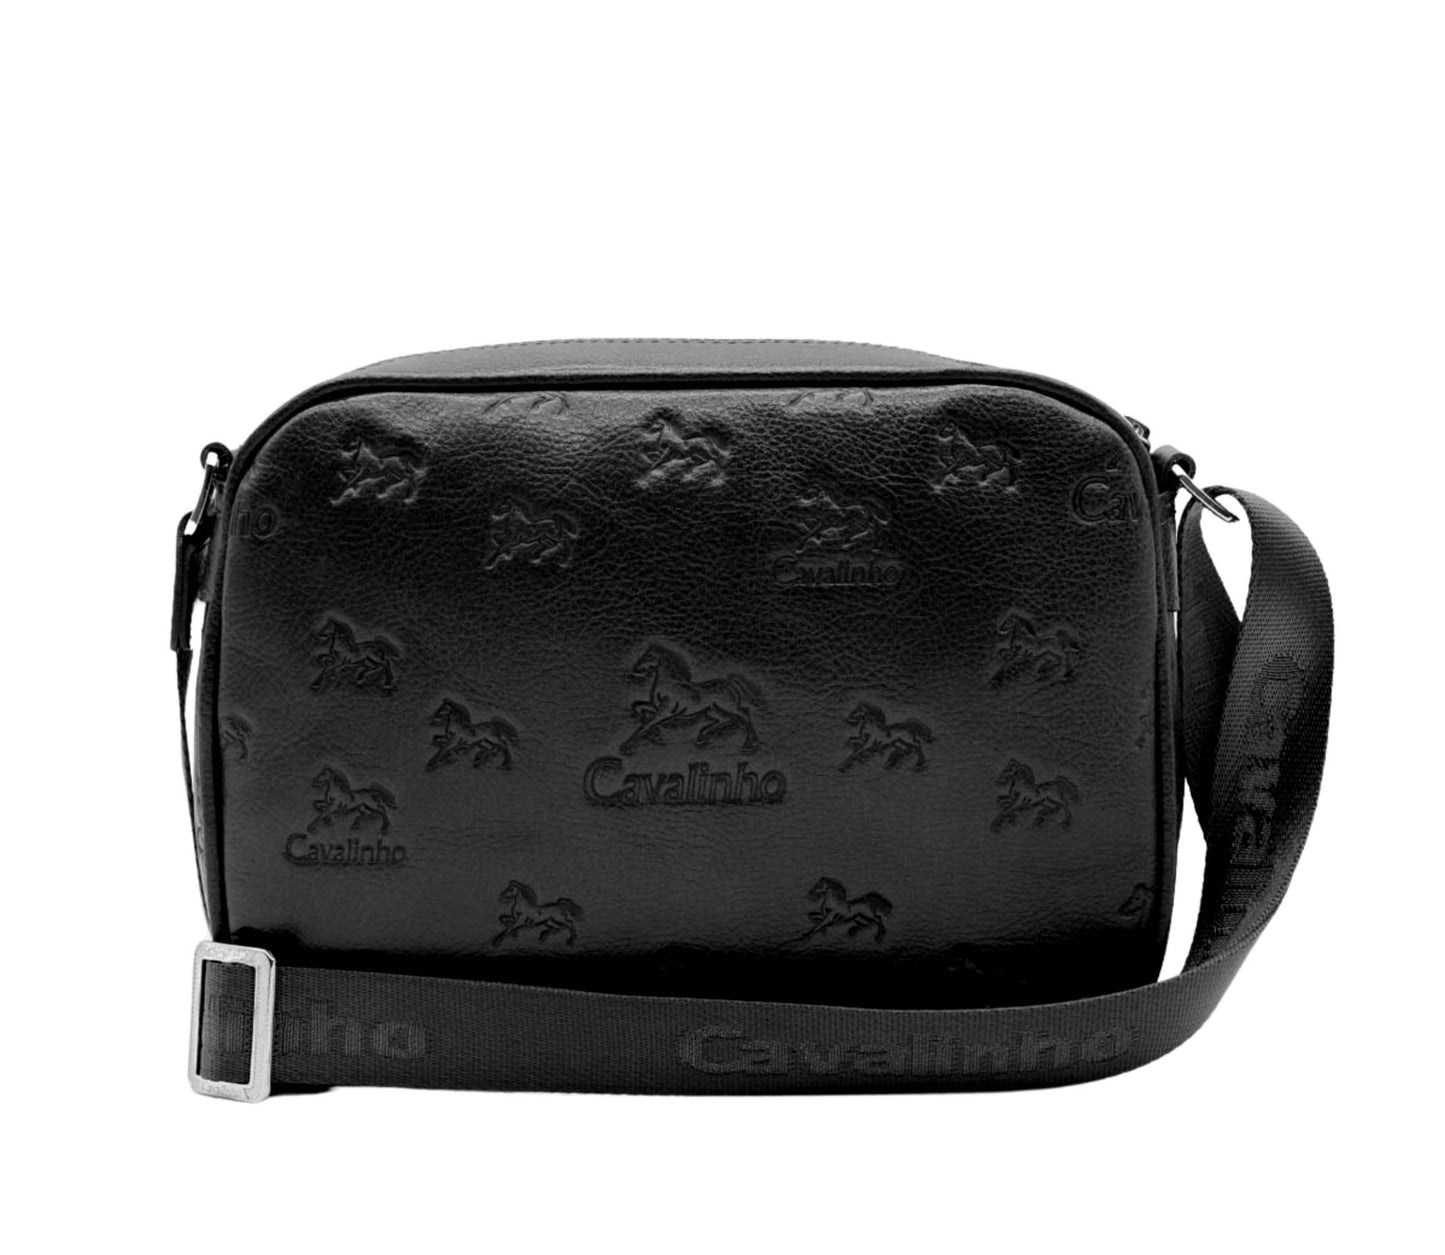 Cavalinho Cavalo Lusitano Leather Crossbody Bag - Black - 18090190.01_3